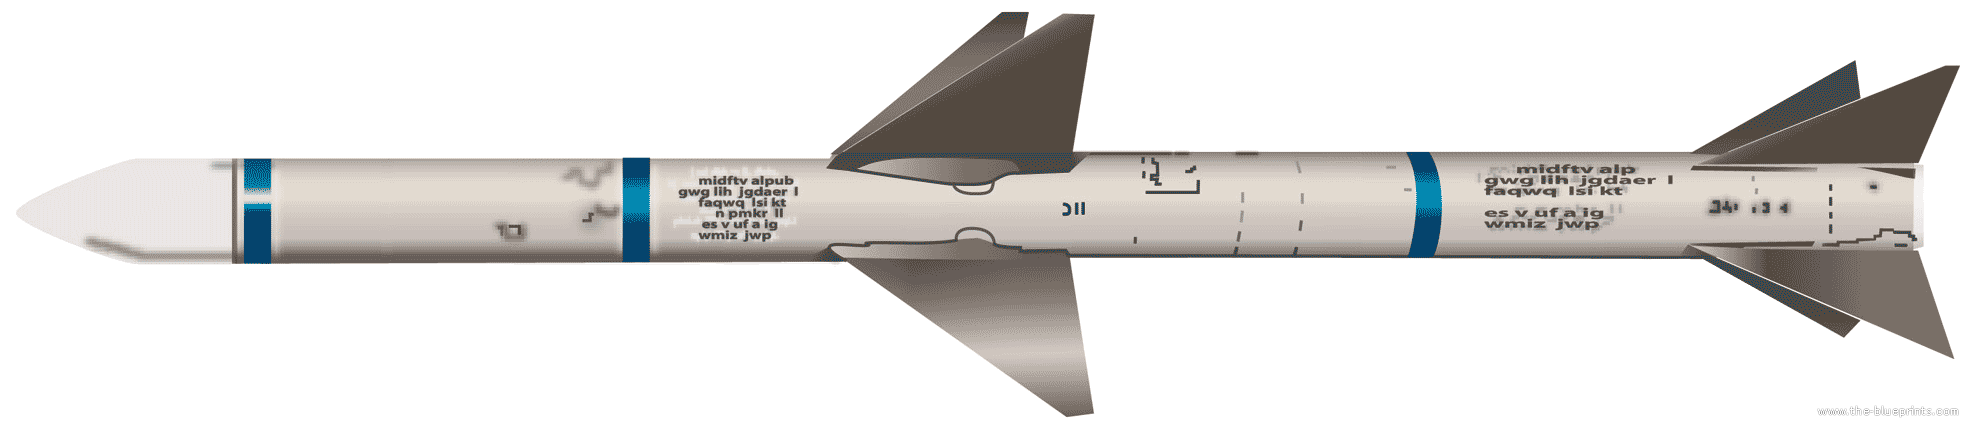 Aim-7f-sparrow-missile.gif